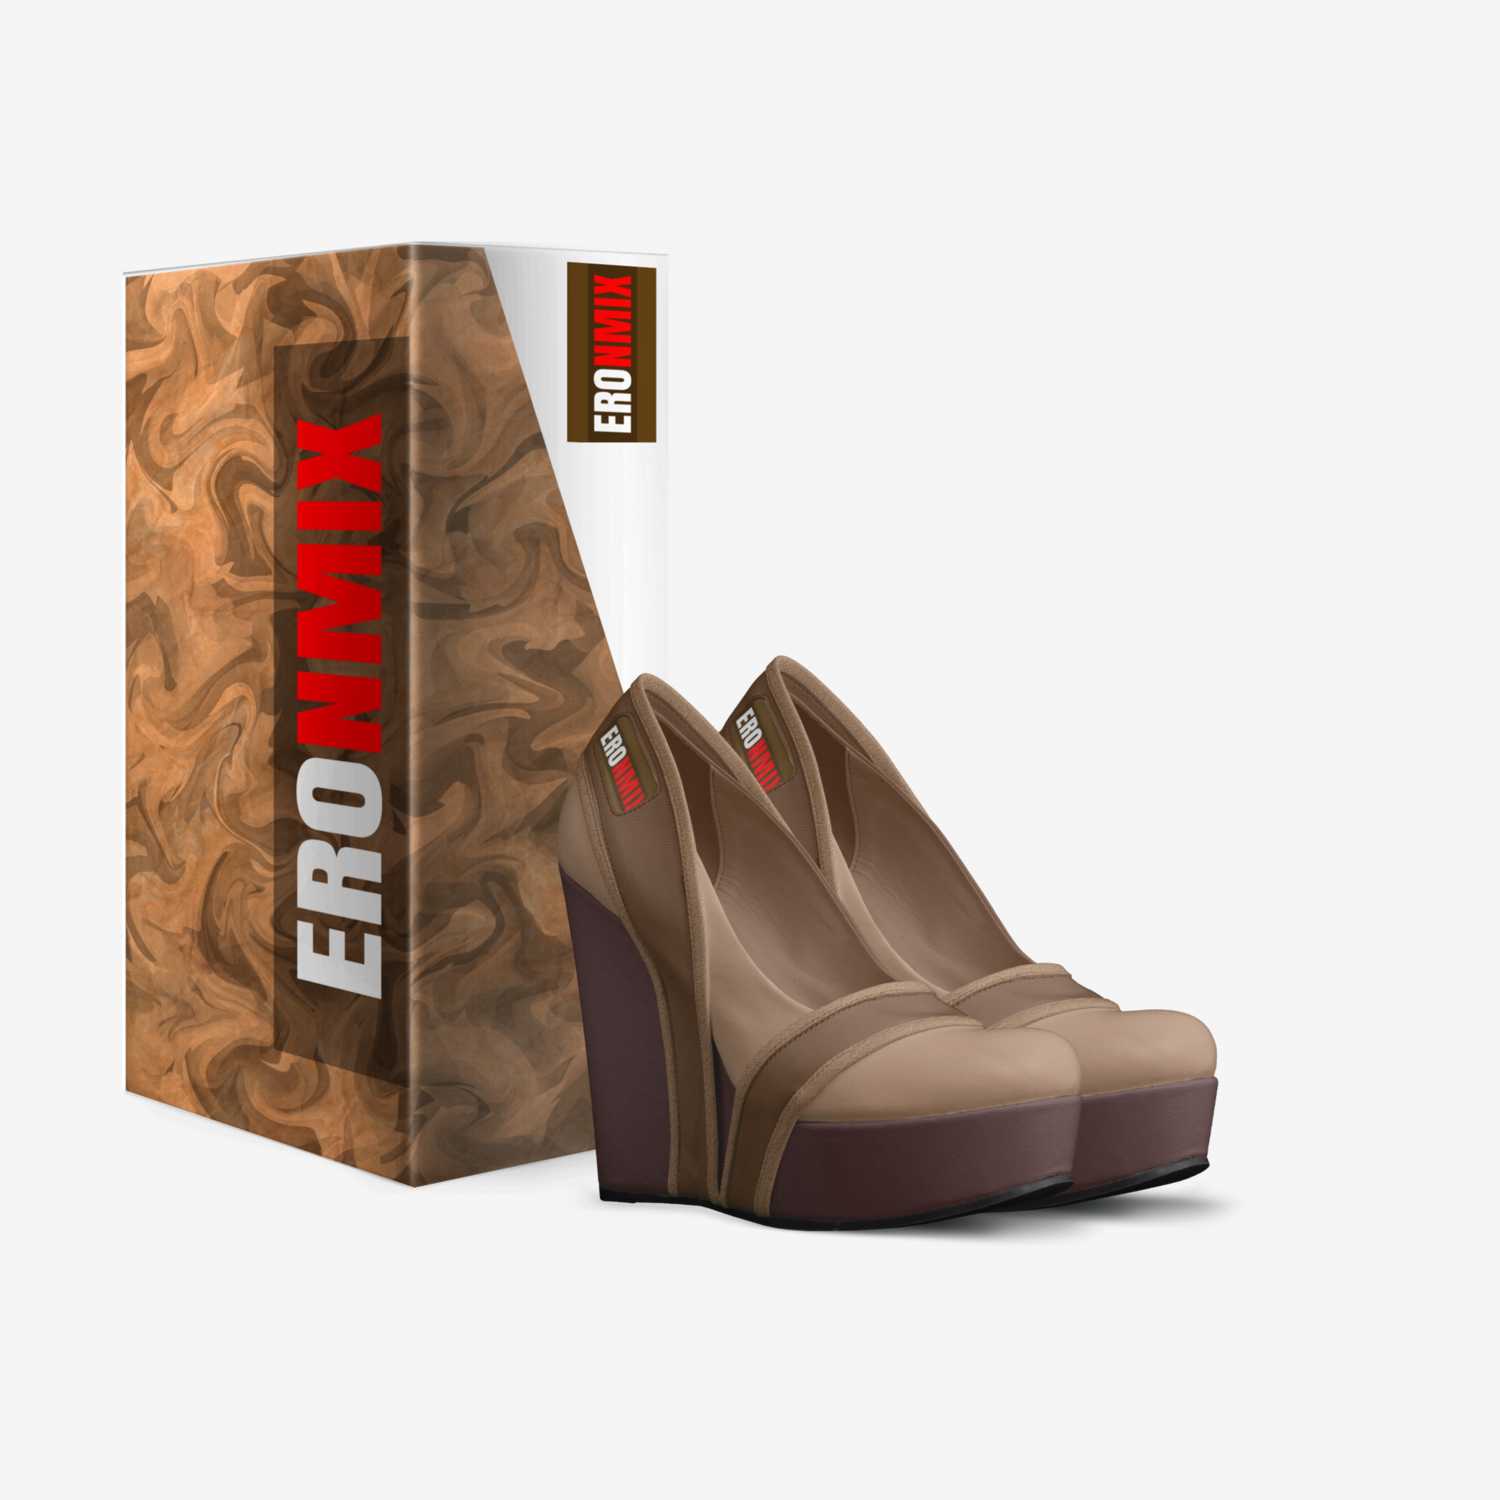 Eronmix Jane-Walks custom made in Italy shoes by Eduardo Ramirez | Box view